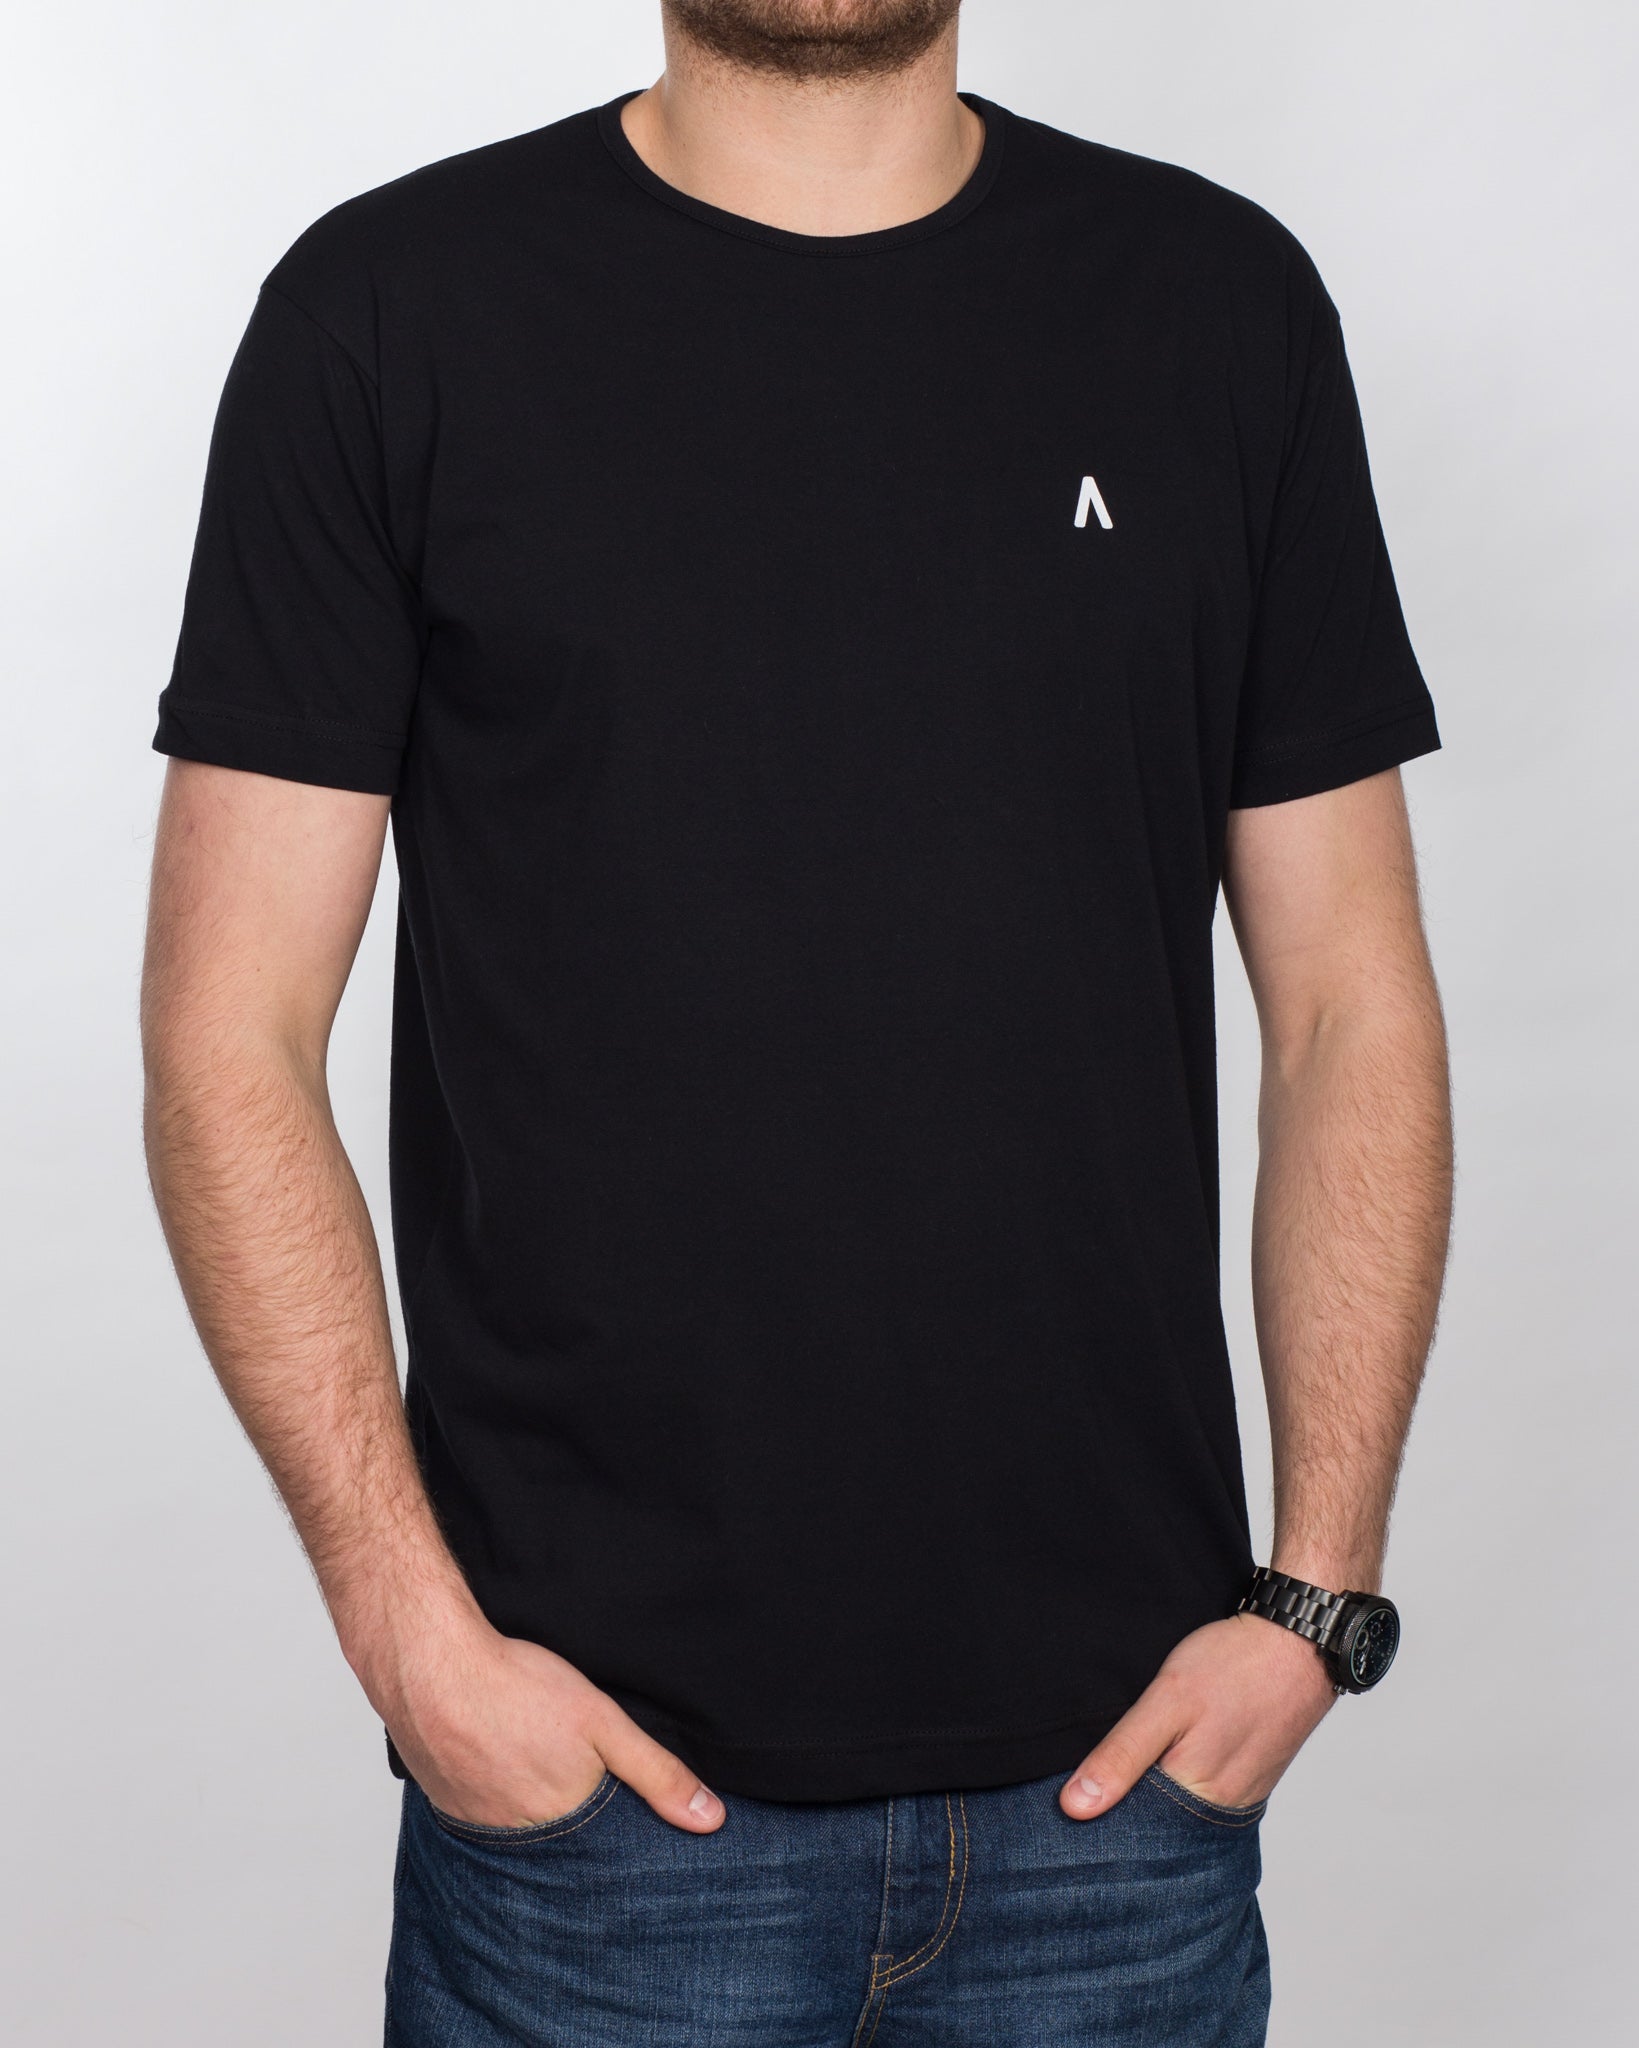 2t Tall T-Shirt (black logo)